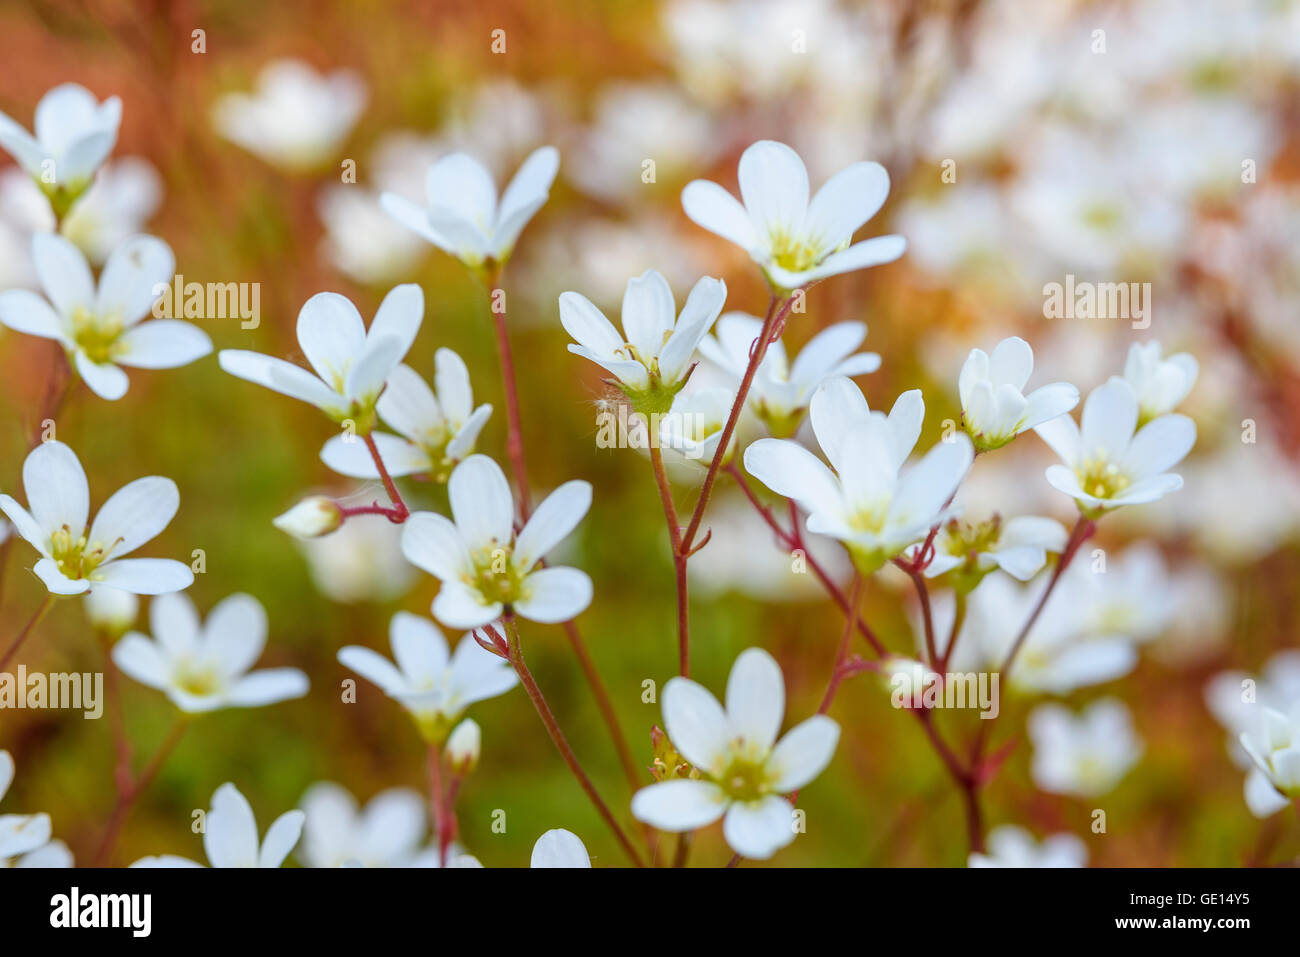 Saxifrage, cultivated garden flower, saxifraga Stock Photo